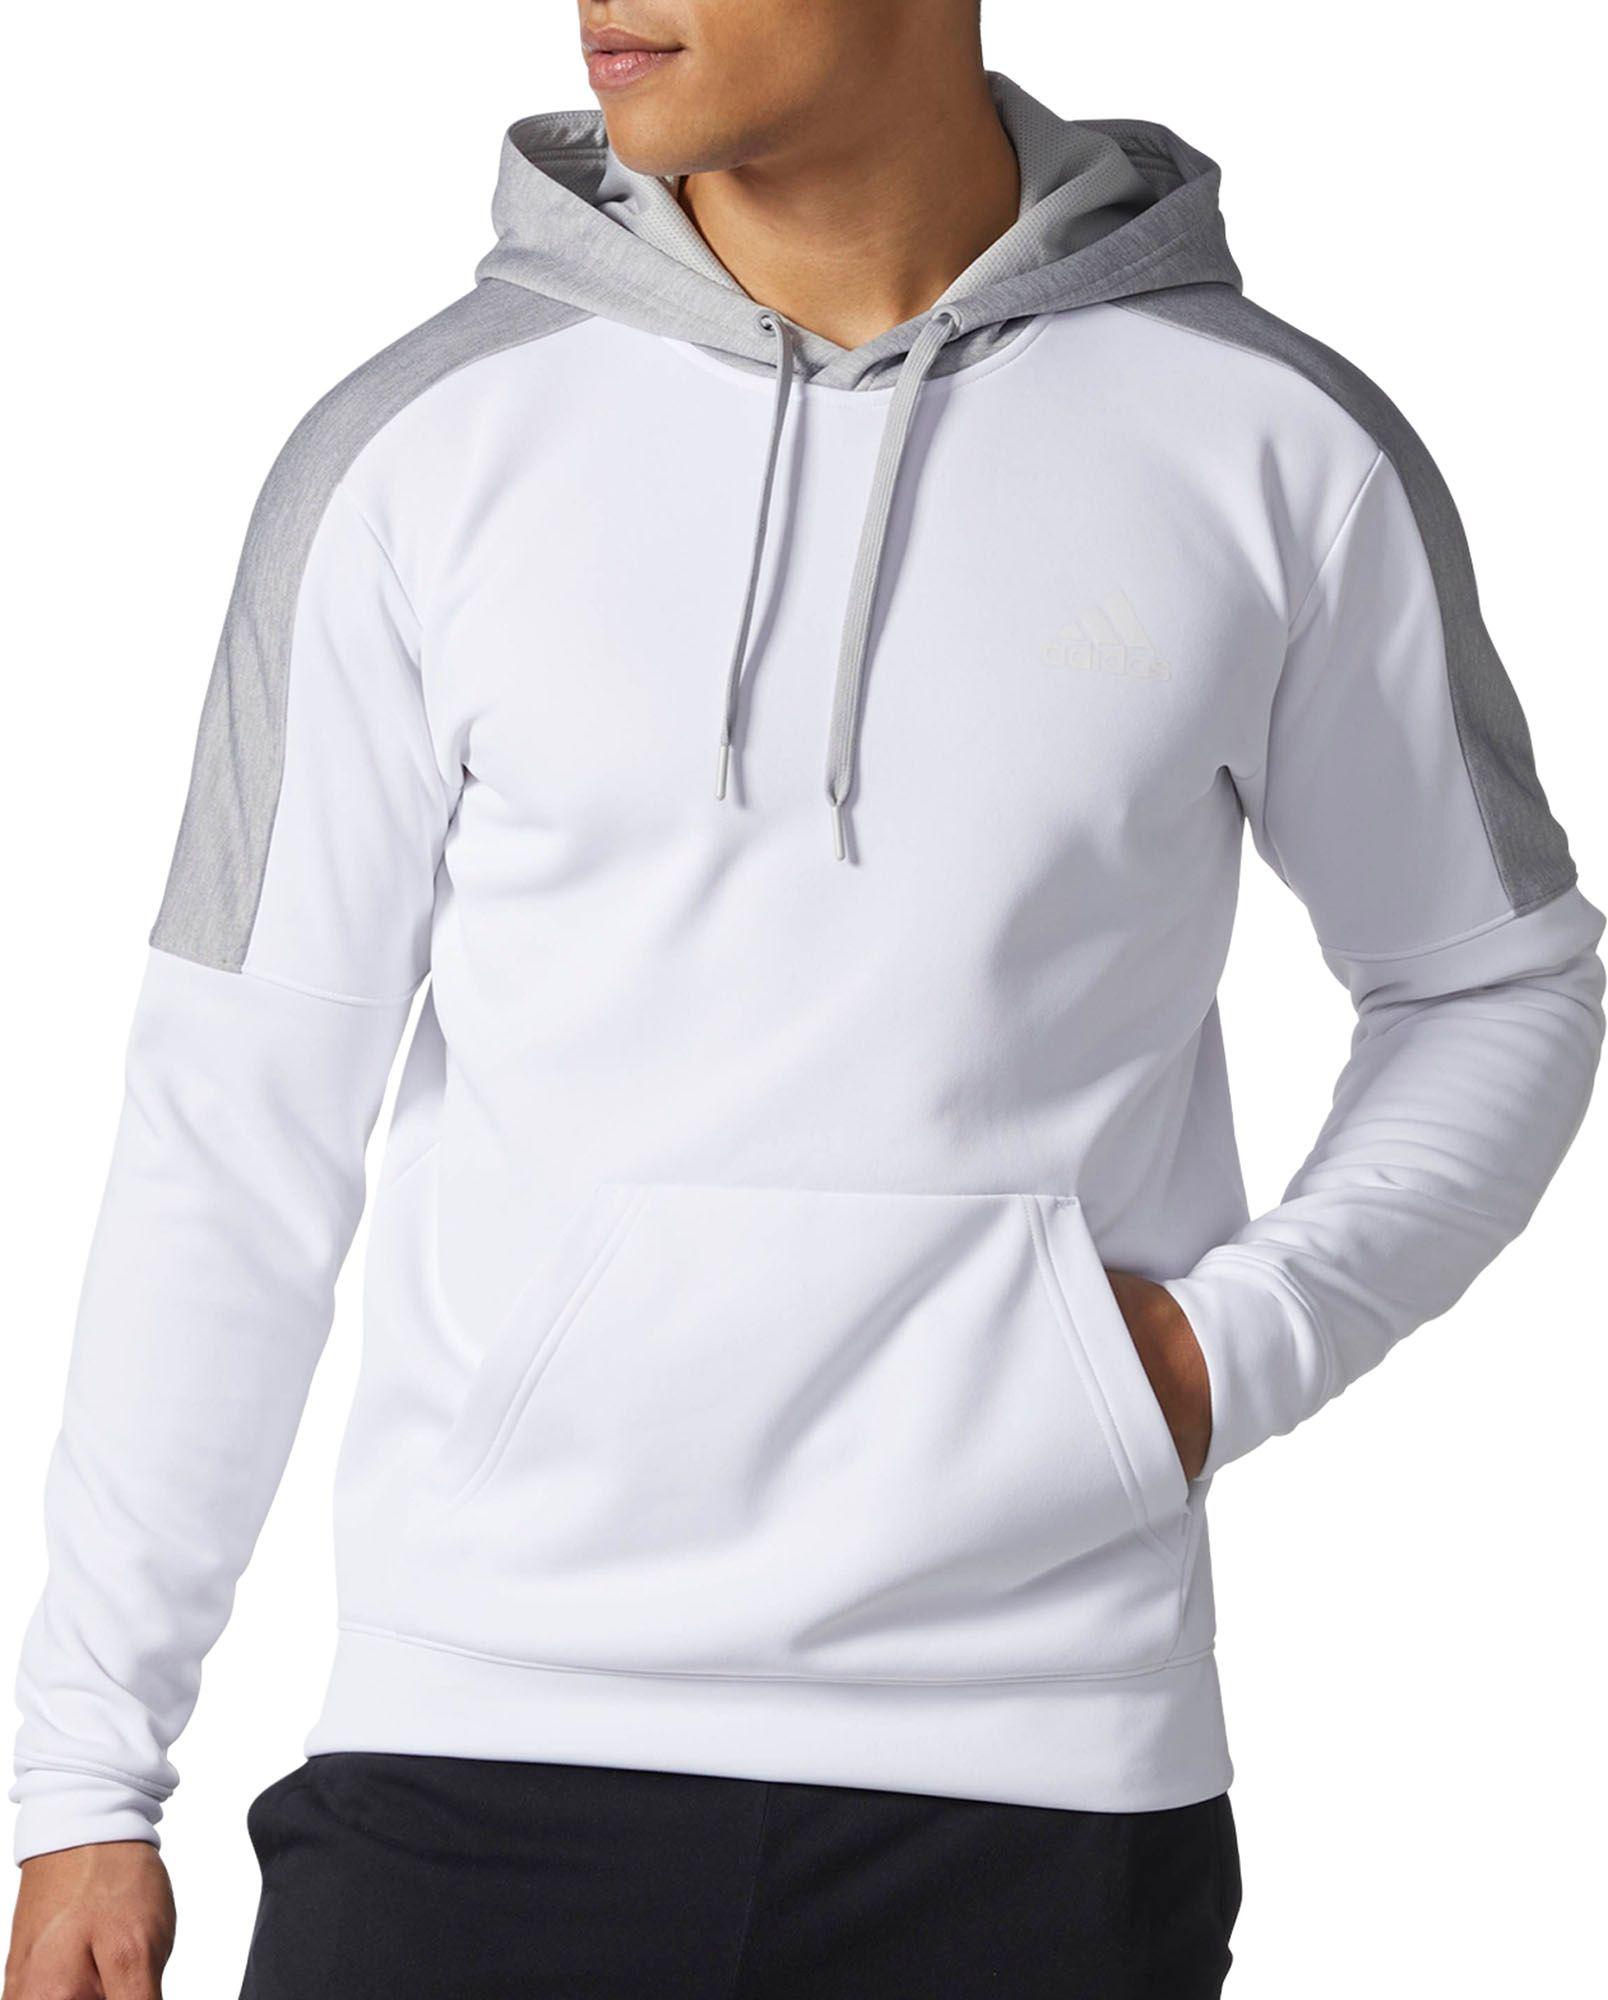 Lyst - adidas Team Issue Fleece Hoodie in White for Men